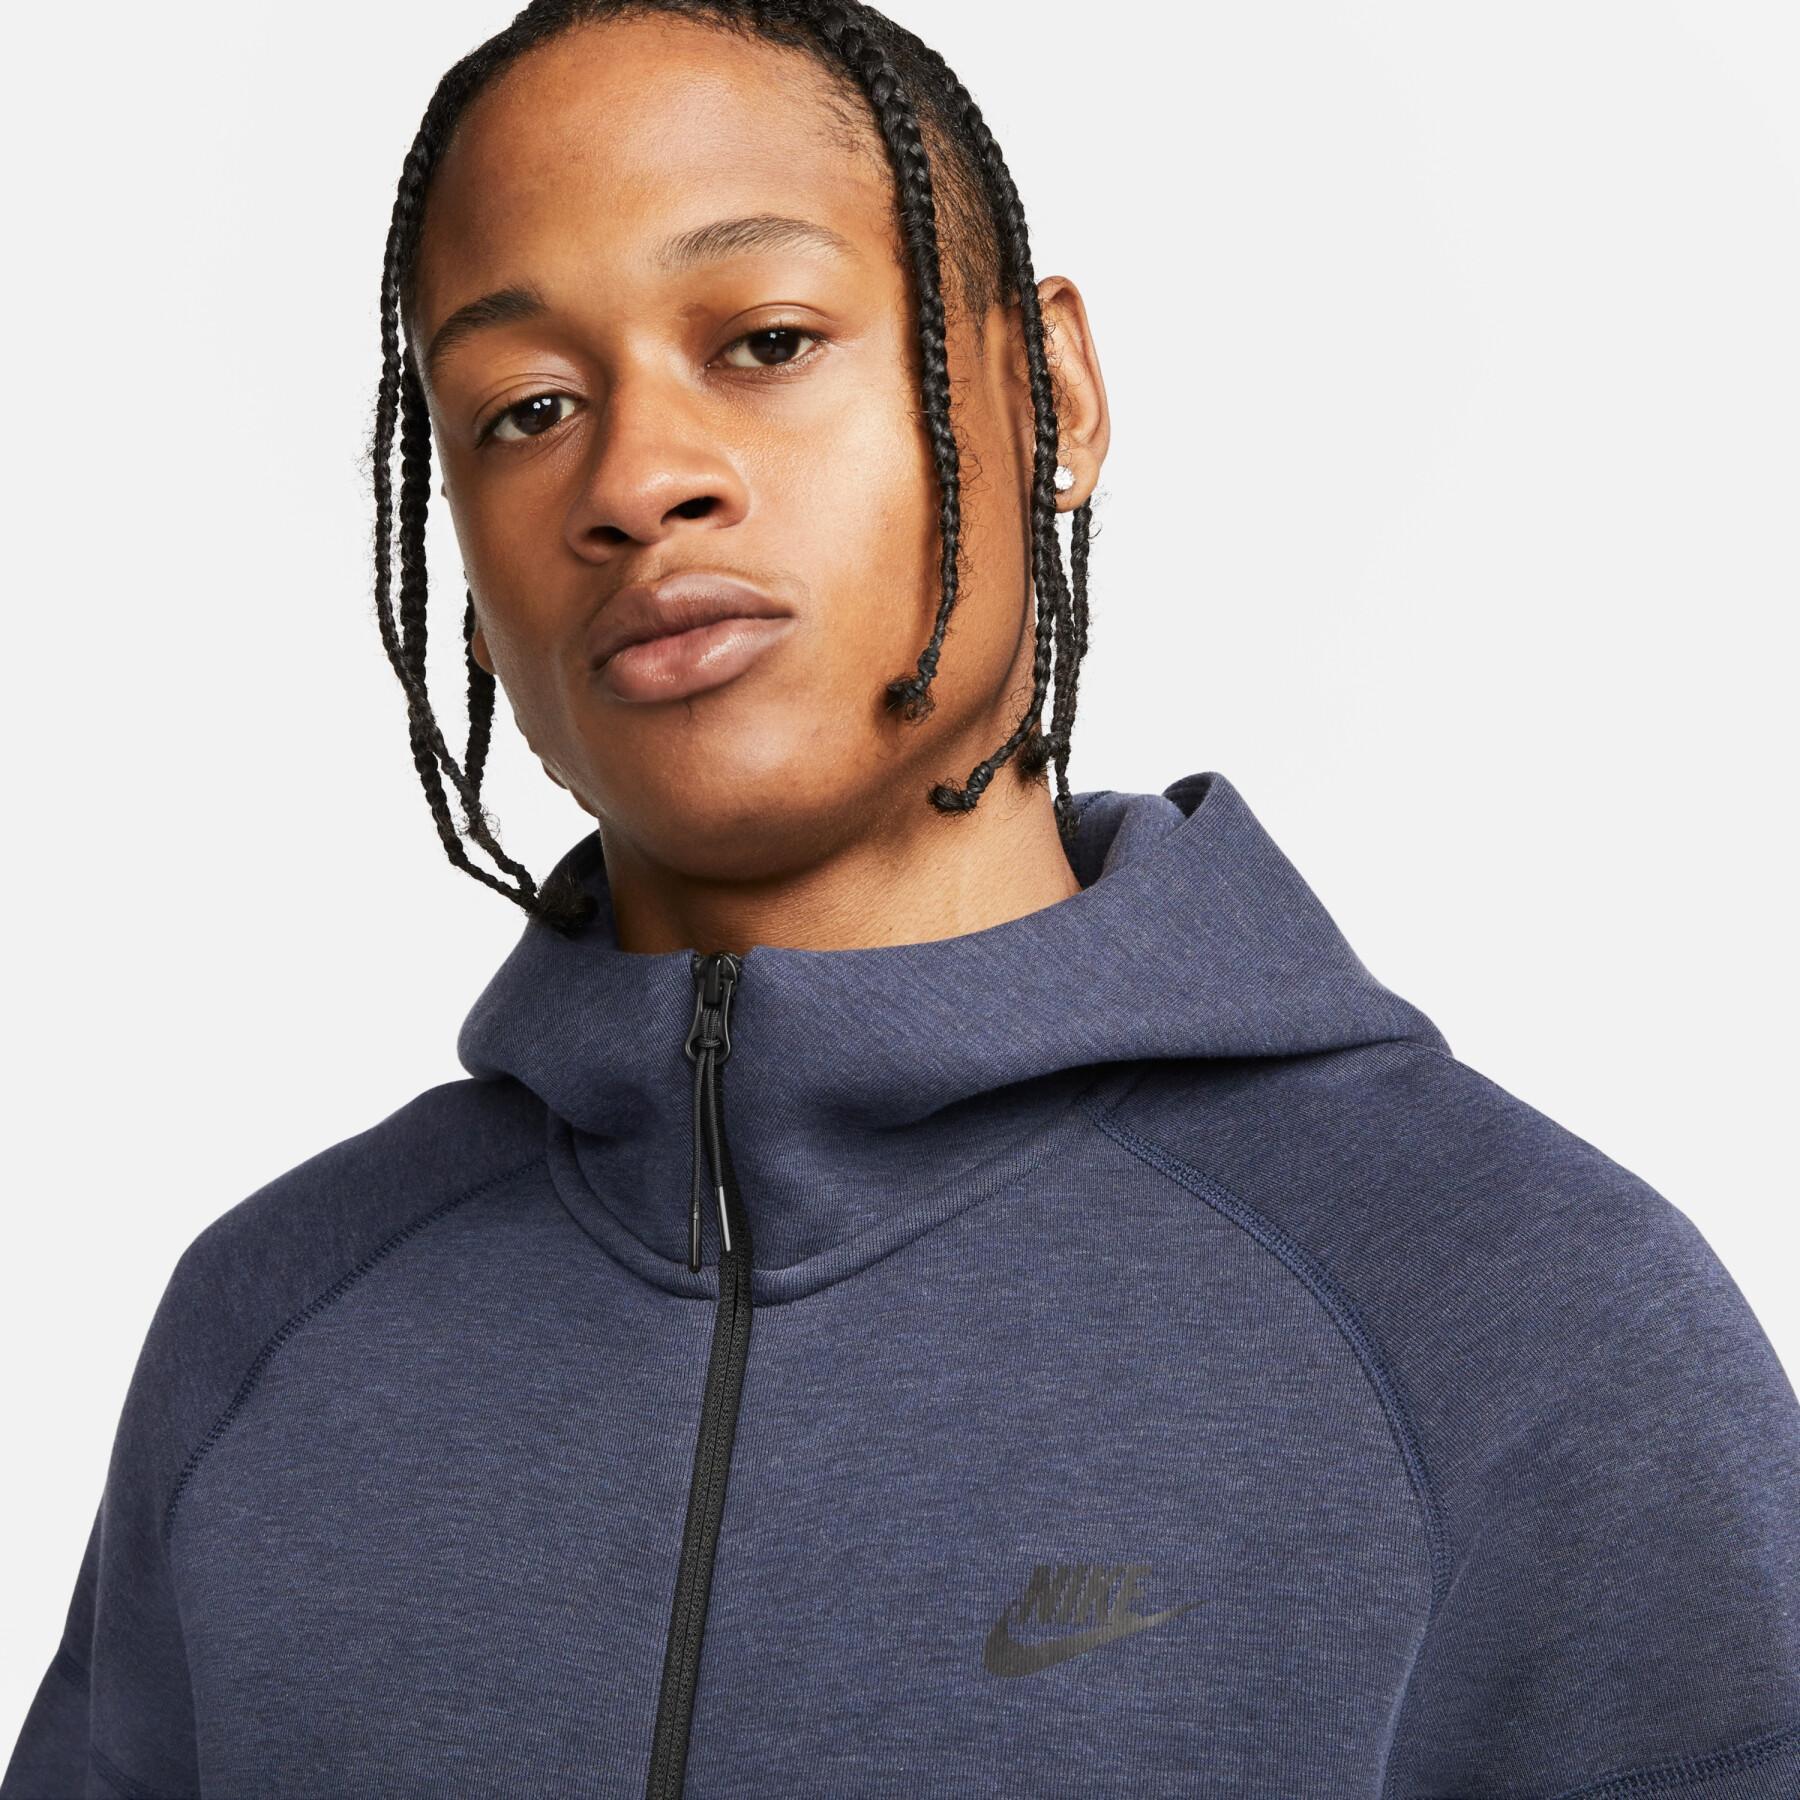 Full zip hoodie Nike Tech Fleece Windrunner - Nike - Brands - Handball wear